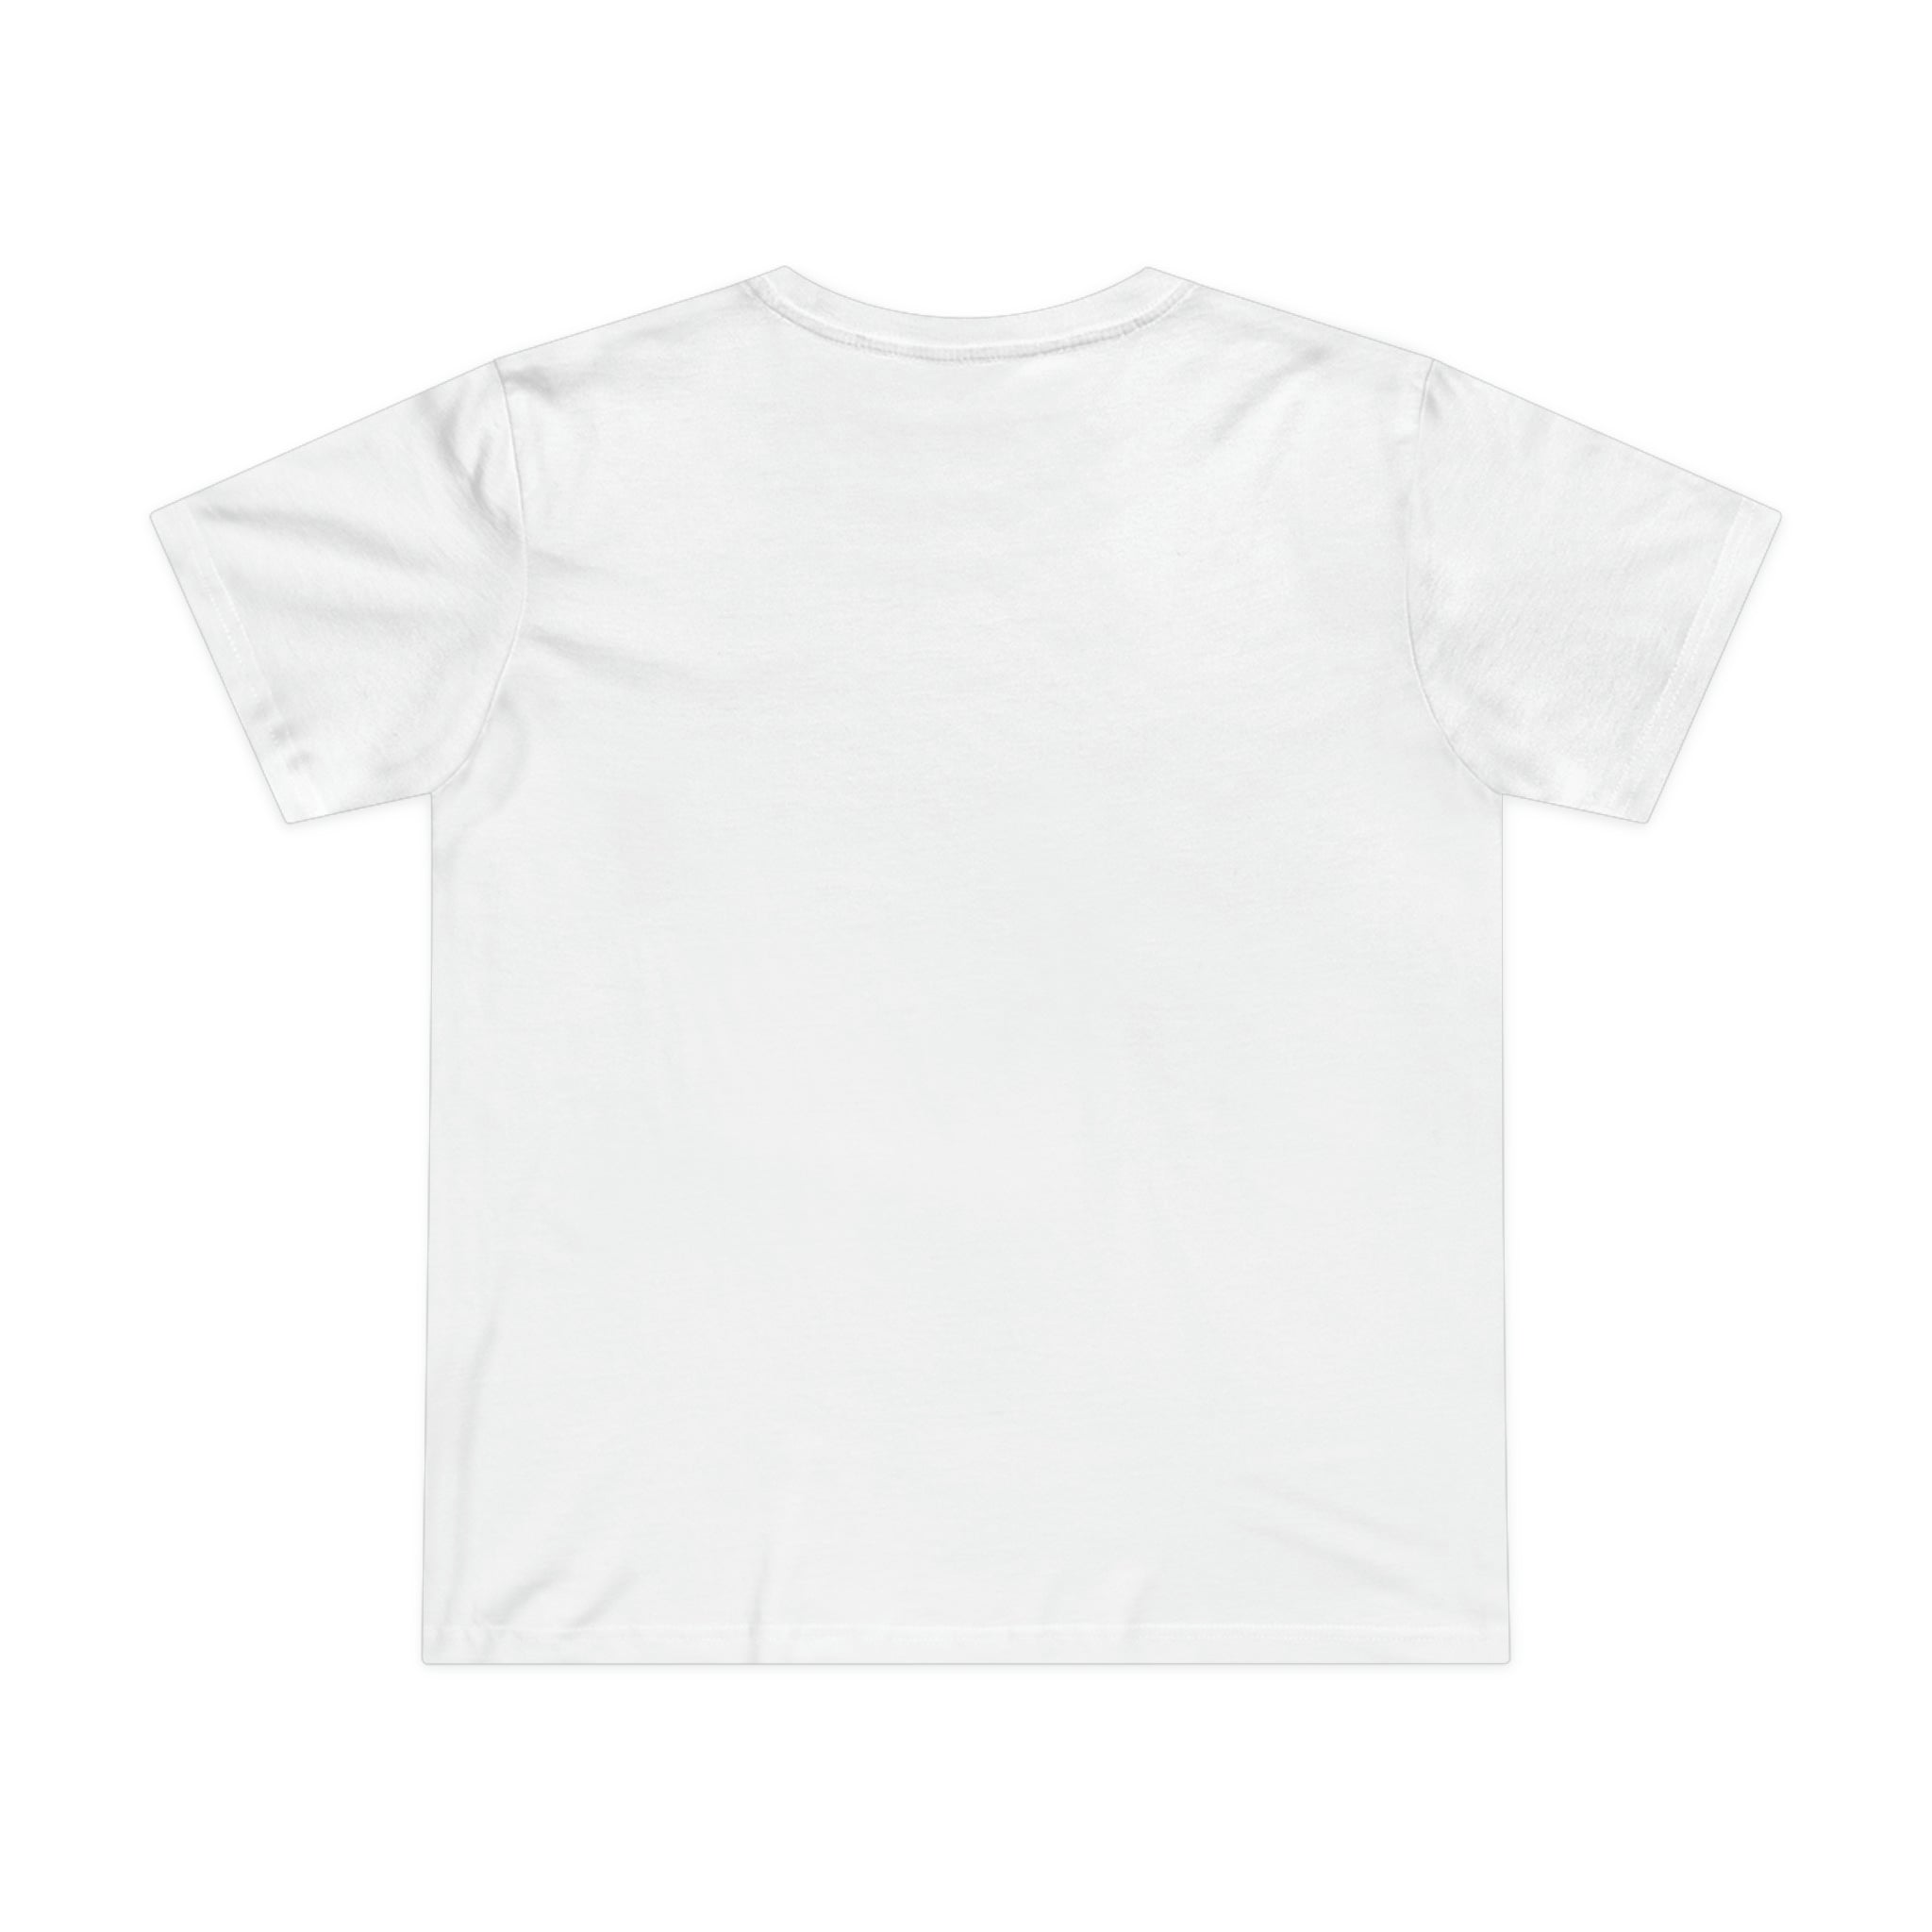 Christmas Cats, Maine Coon Cat | Women's Premium Cotton Crewneck T-Shirt in White, Size AU XS-2XL | Regular Fit, Short Sleeves, Preshrunk Material